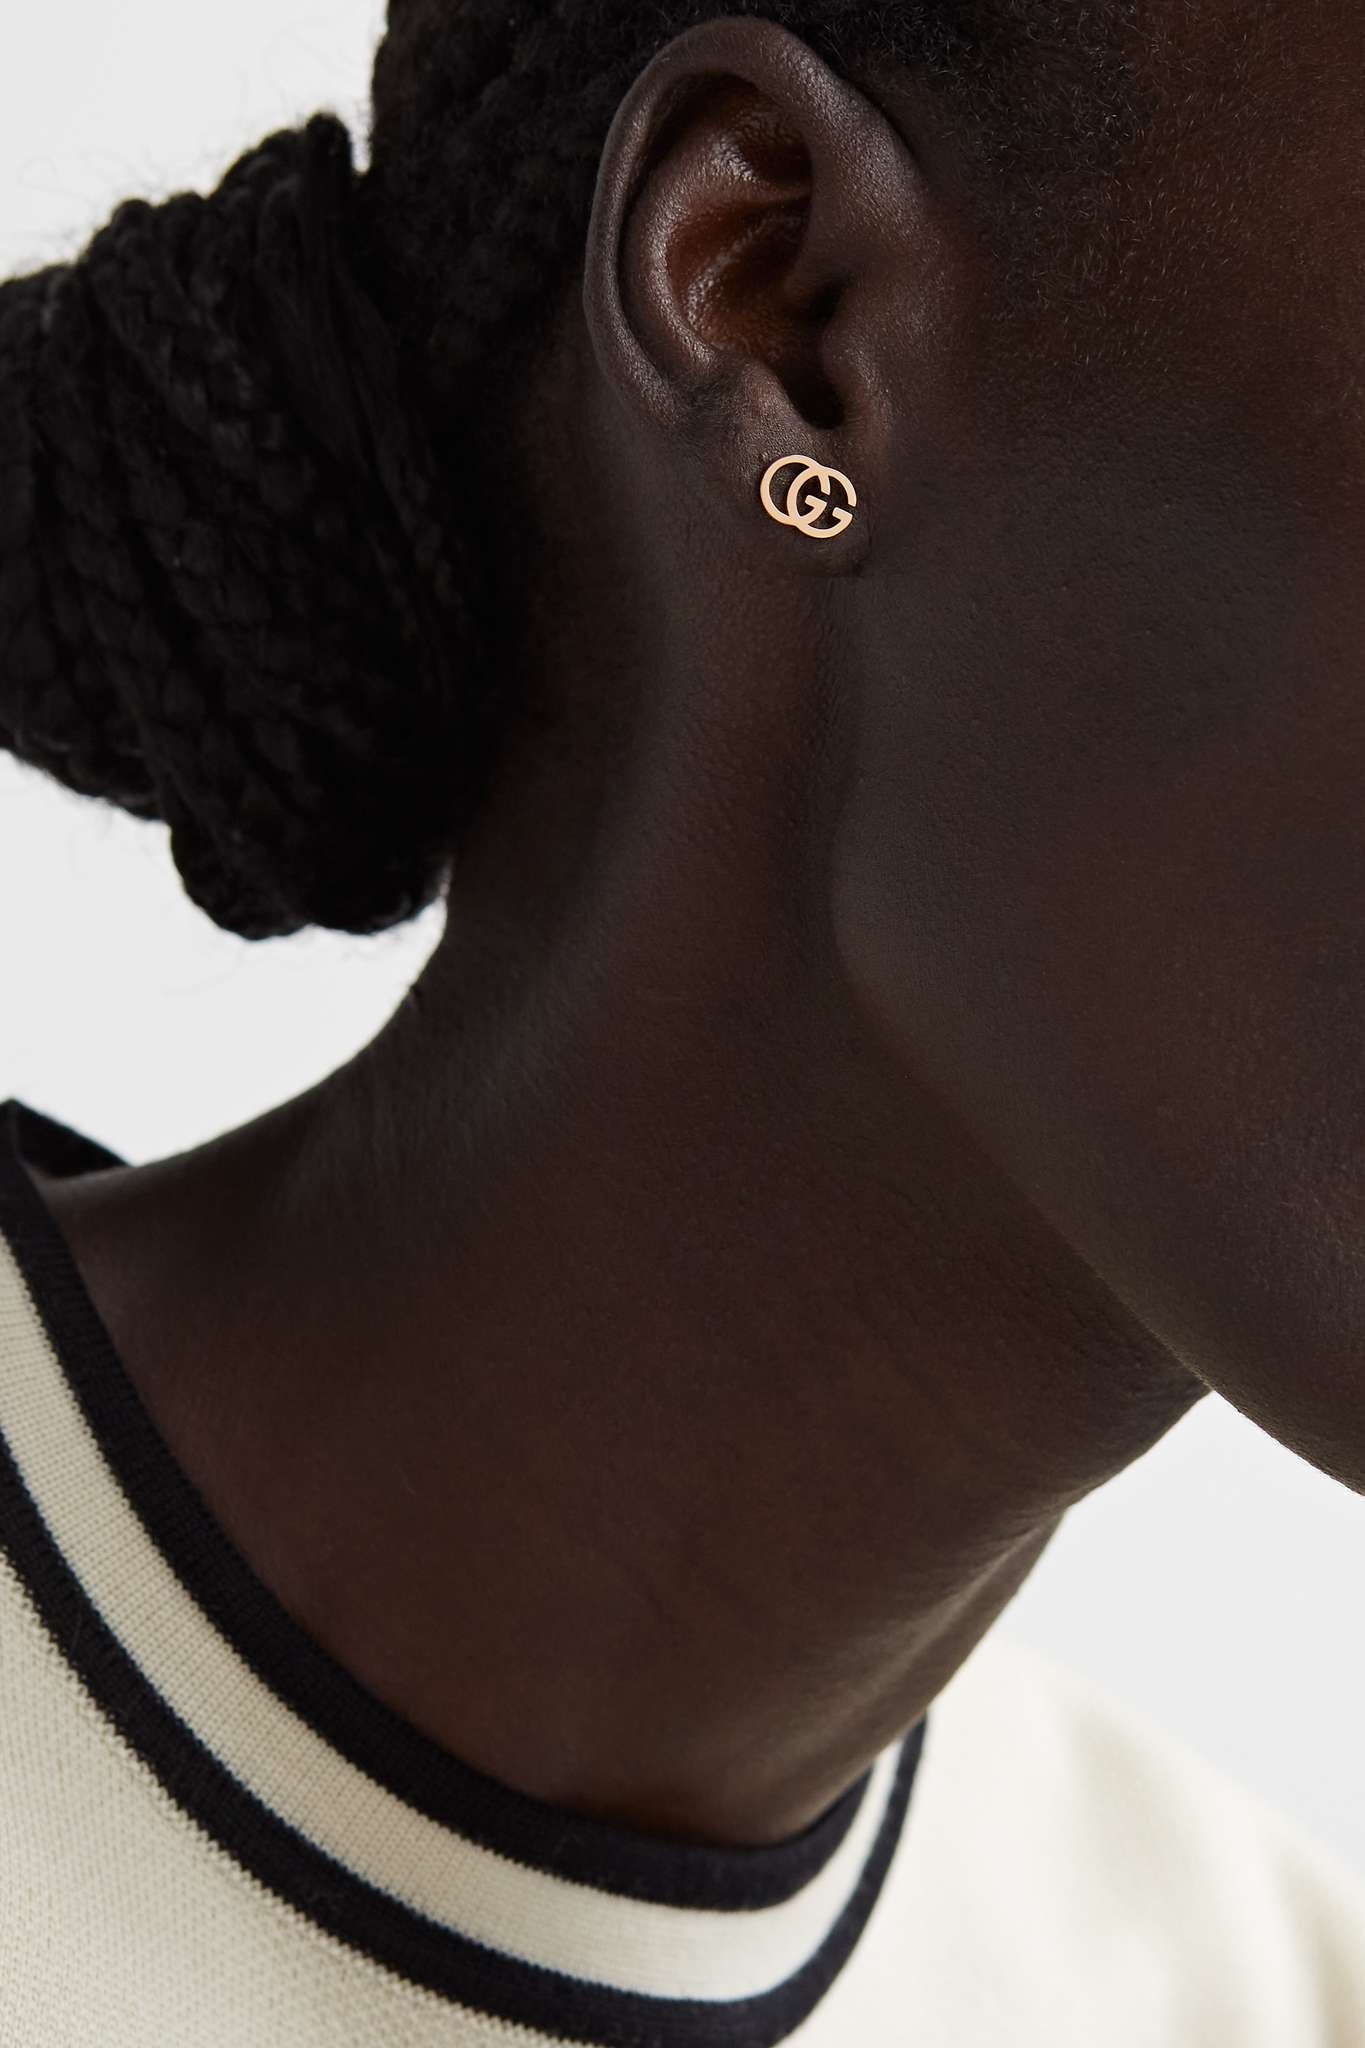 Gucci 18-karat rose gold earrings - 2